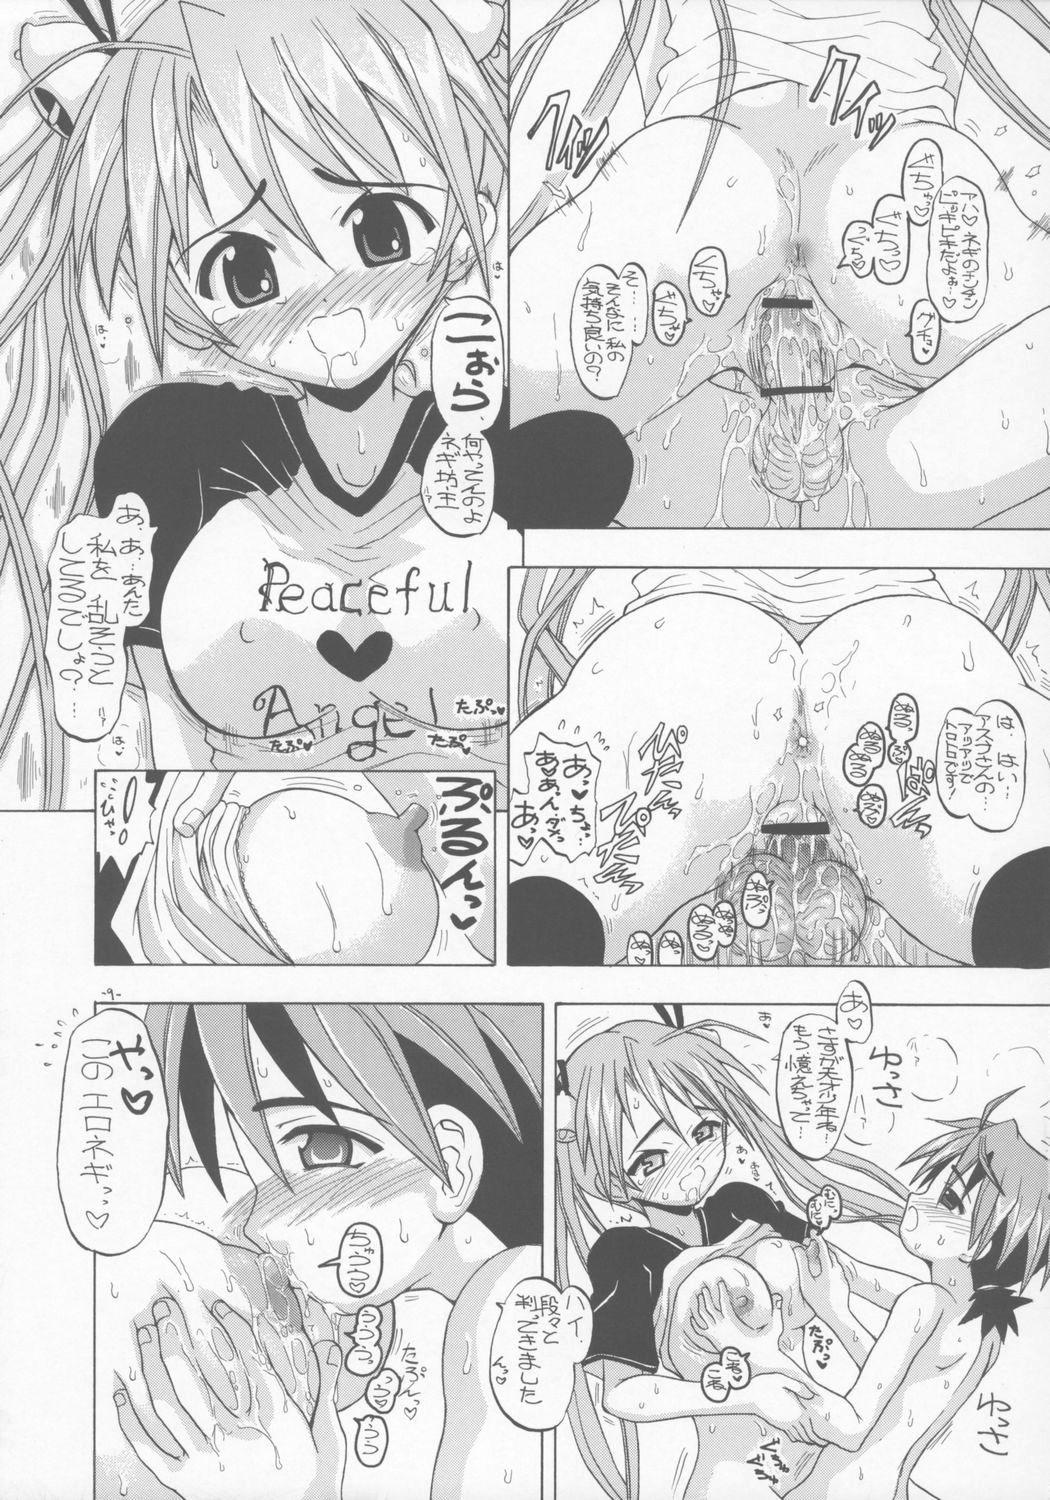 Hot AsuNAX! - Mahou sensei negima Curious - Page 8